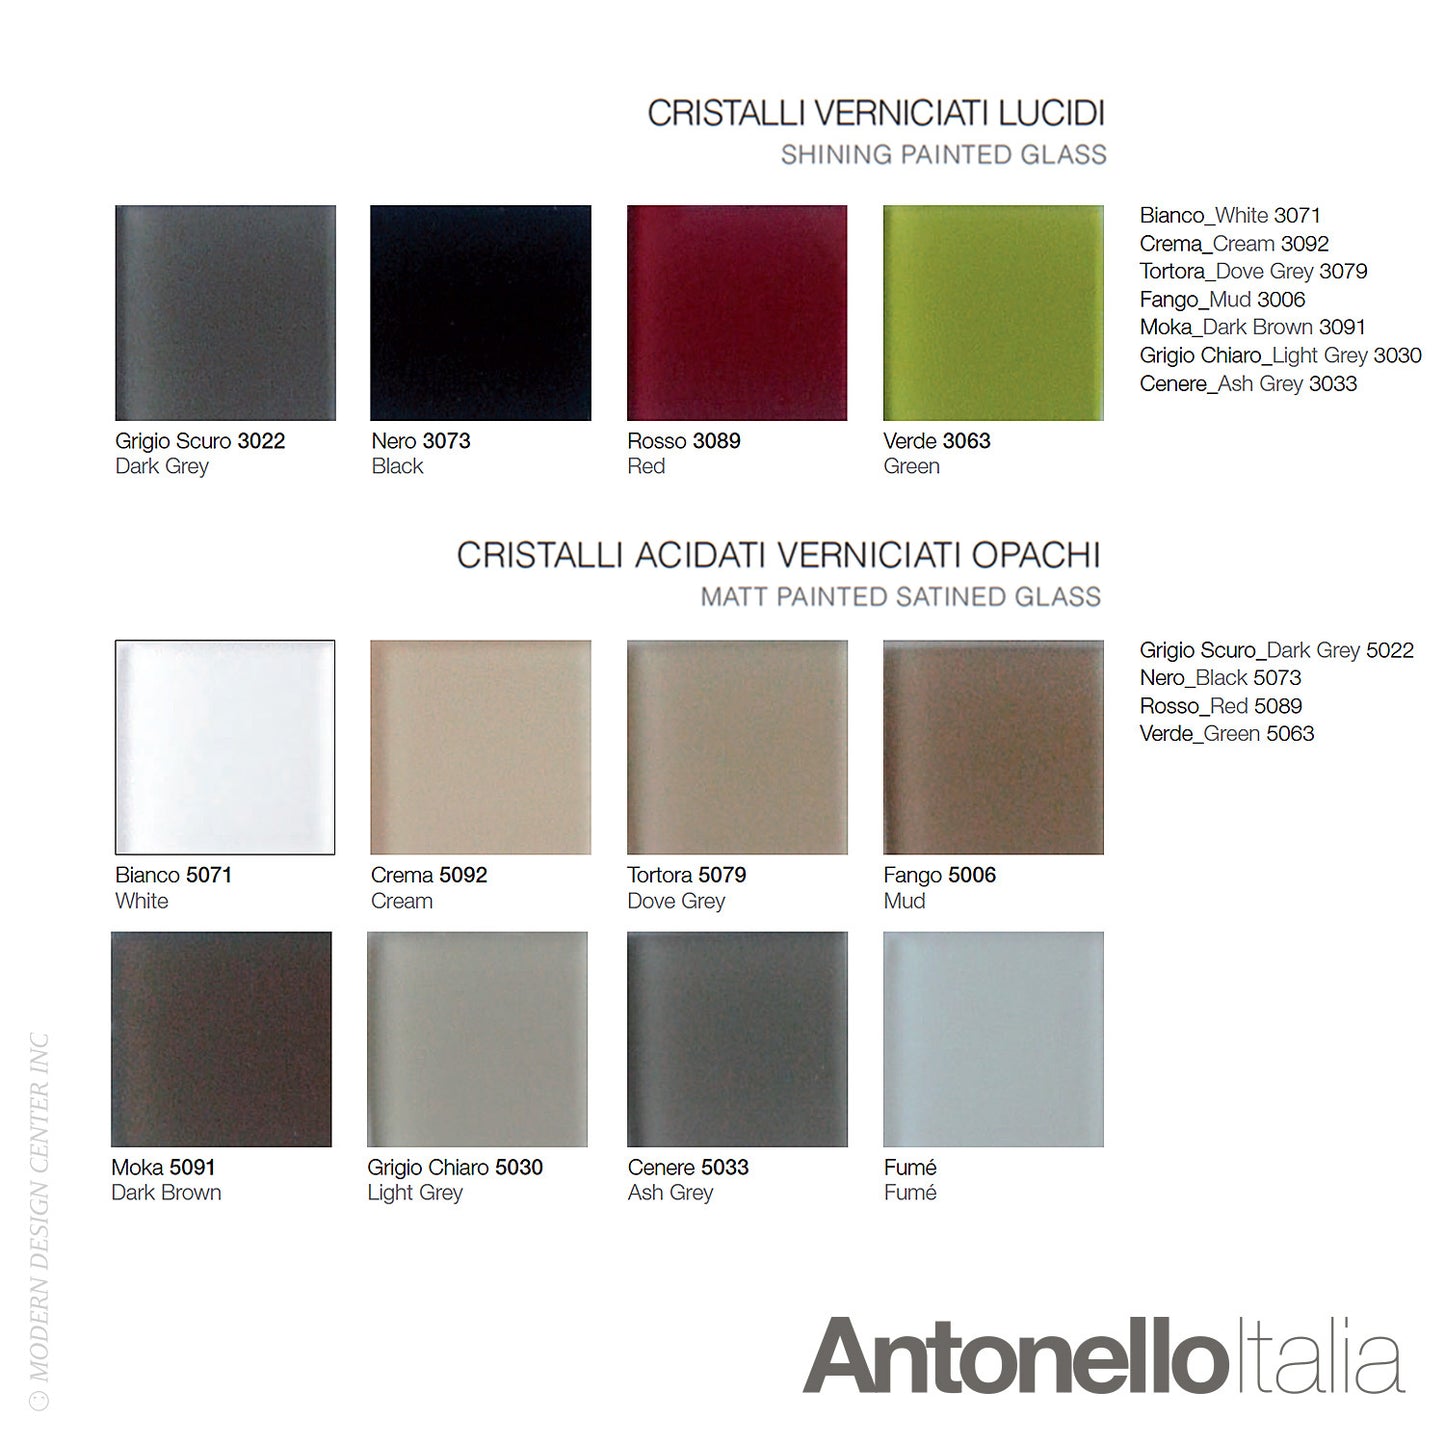 Antonello Italia Arthur Dining Table | Antonello Italia | LoftModern